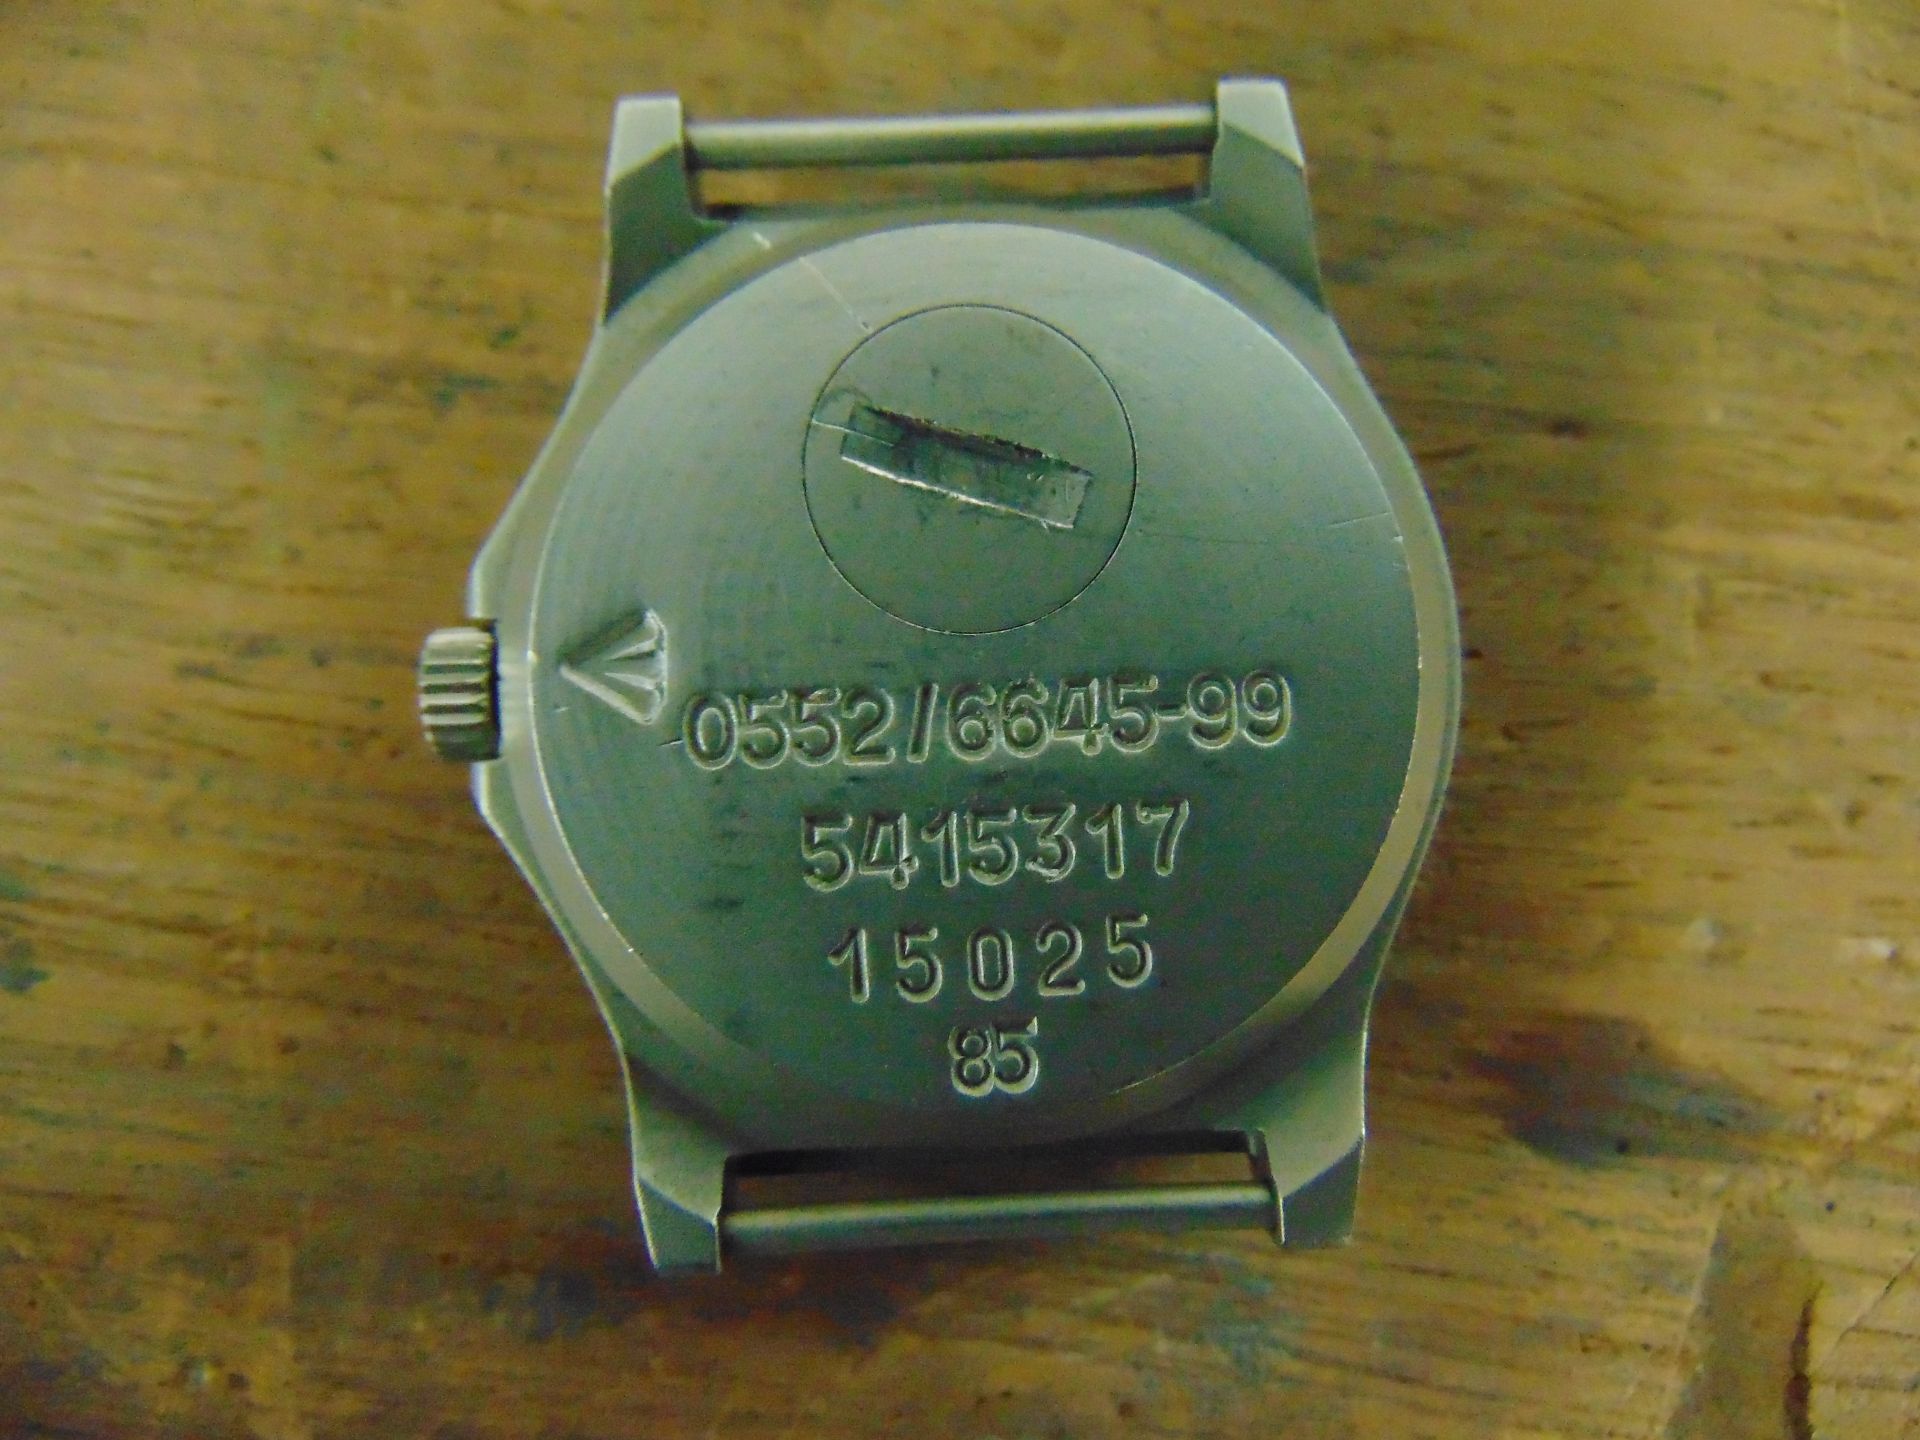 Genuine British Army, CWC quartz wrist watch - Image 3 of 3